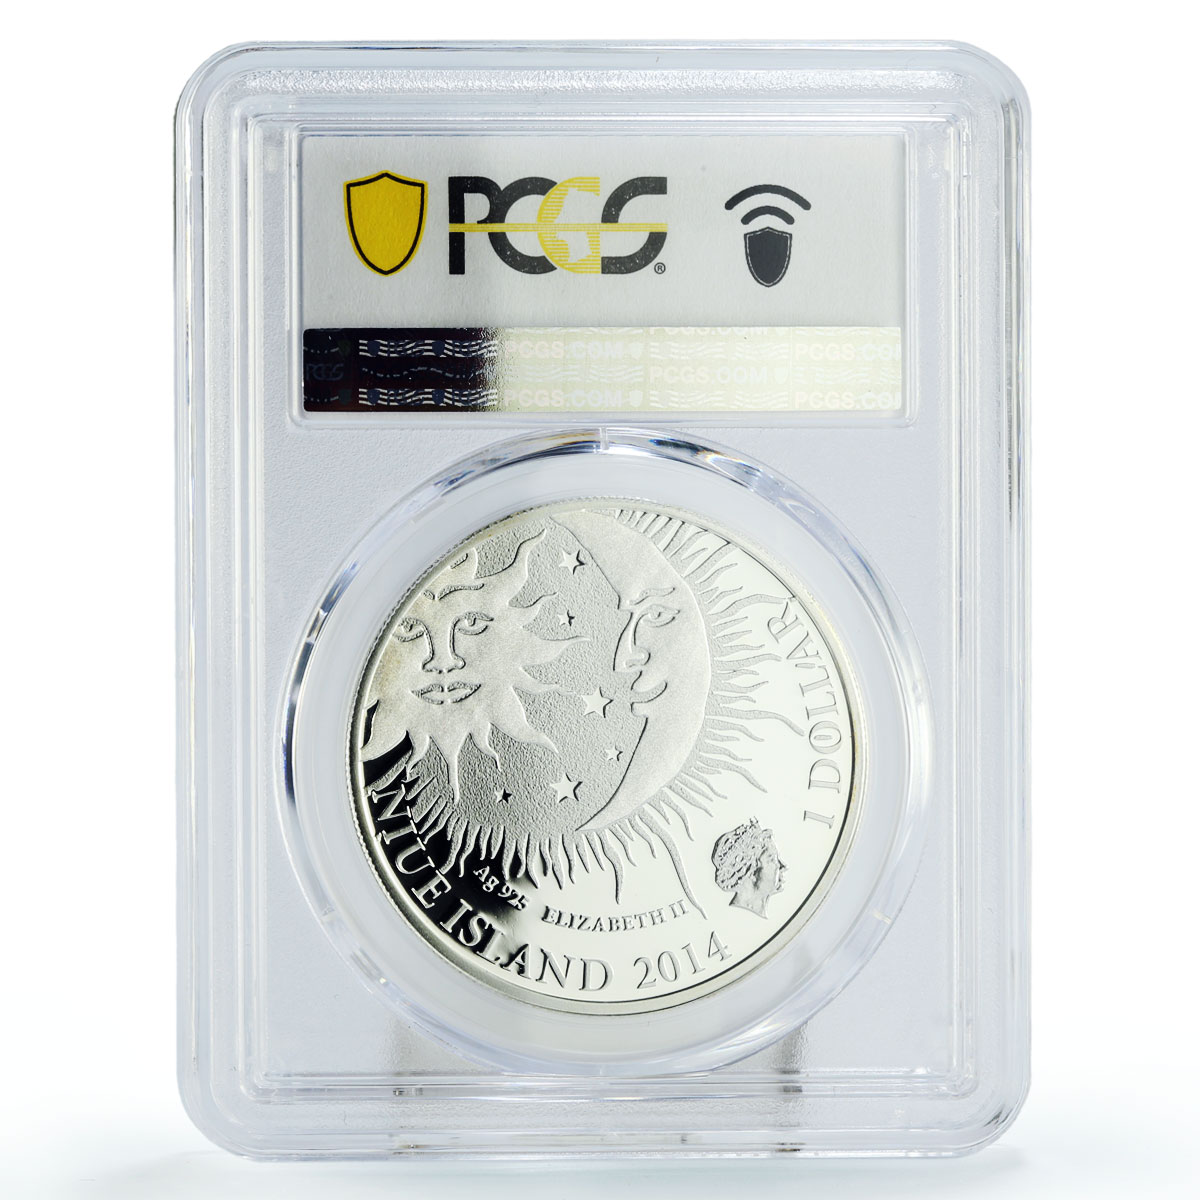 Niue 1 dollar Zodiac Signs series Scorpio PR69 PCGS colored silver coin 2014